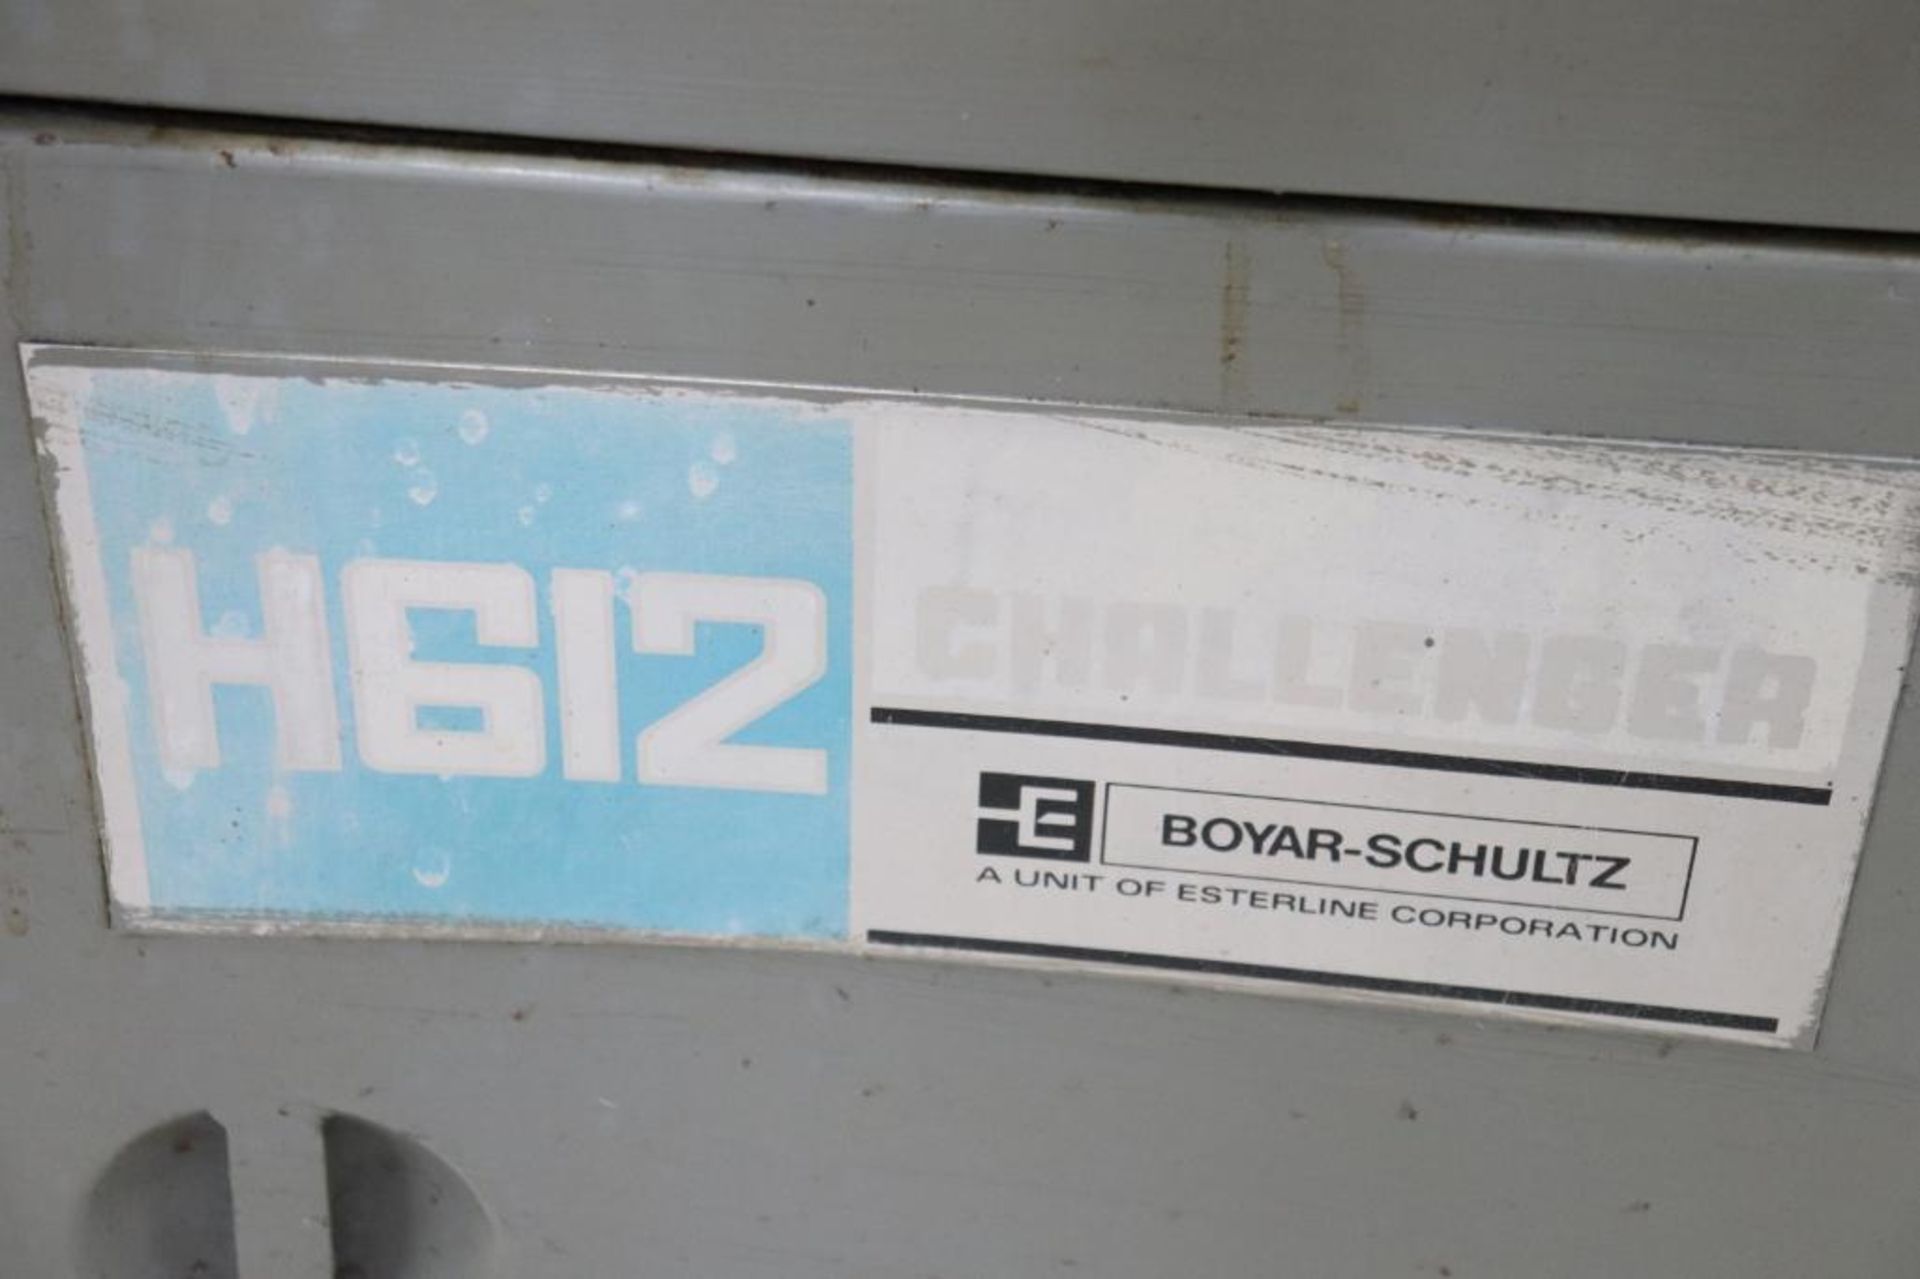 Boyar-Schultz H612 hand feed surface grinder - Image 6 of 6